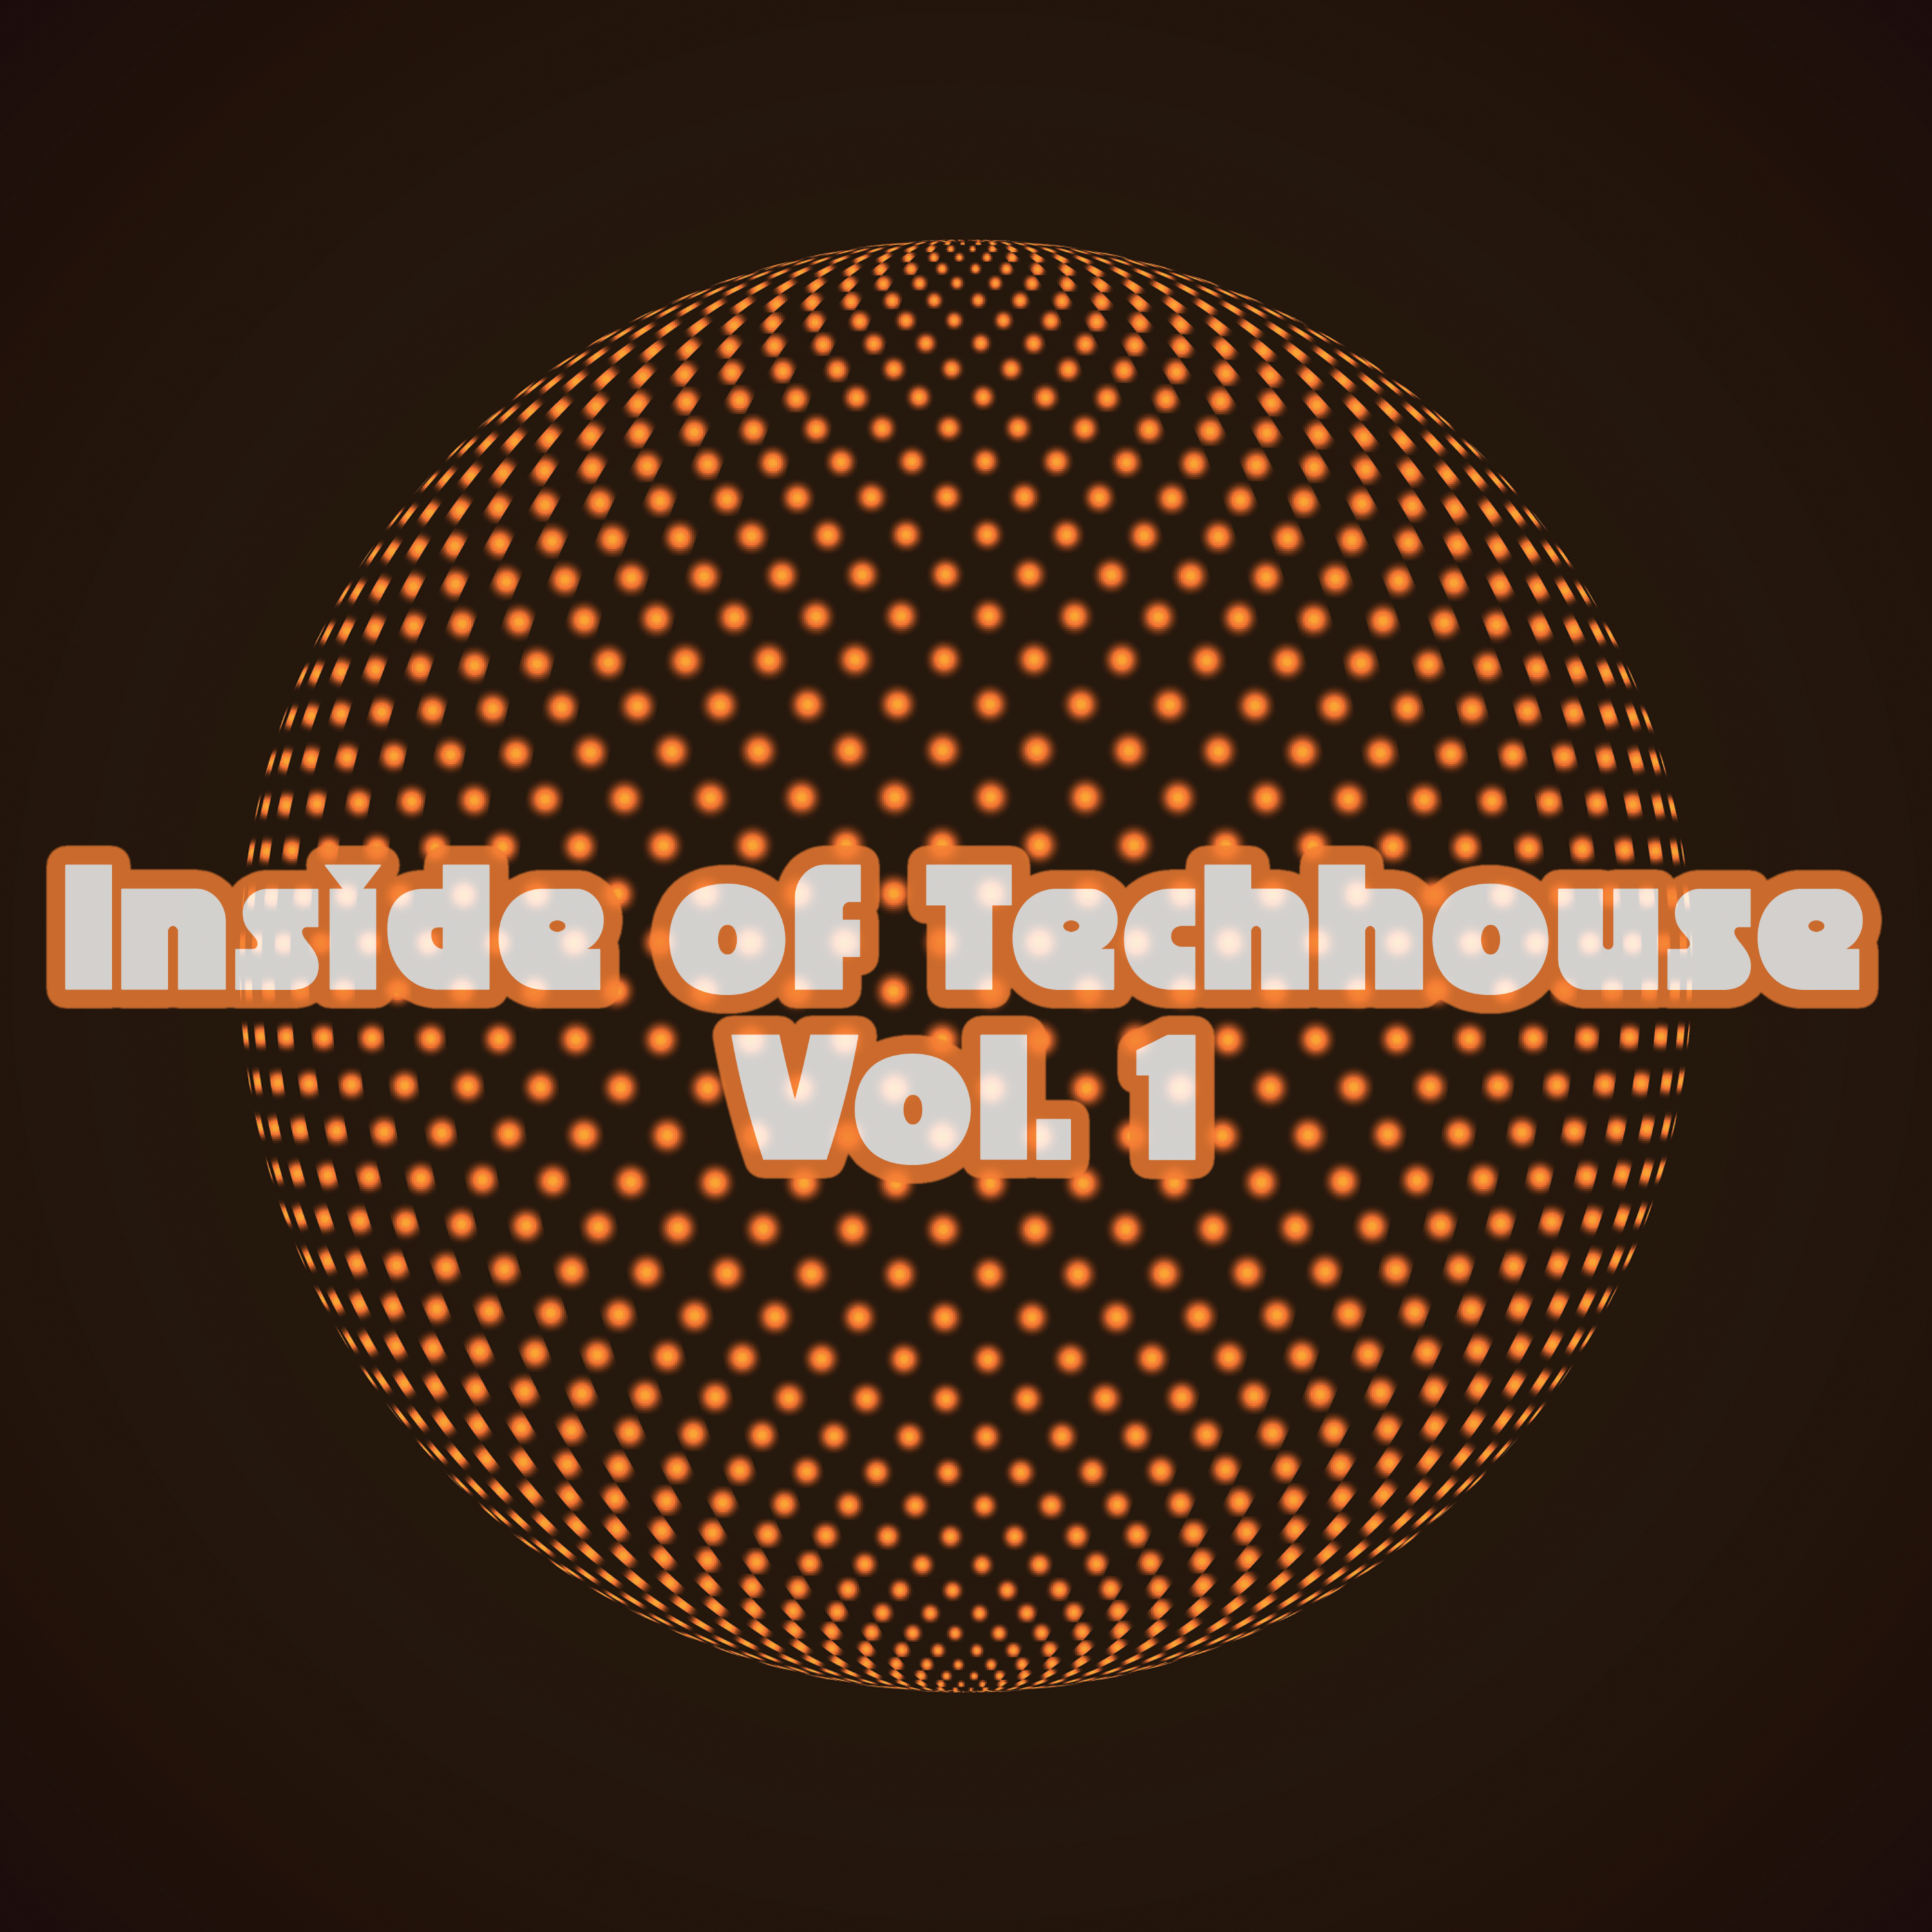 Inside of Techhouse, Vol. 1